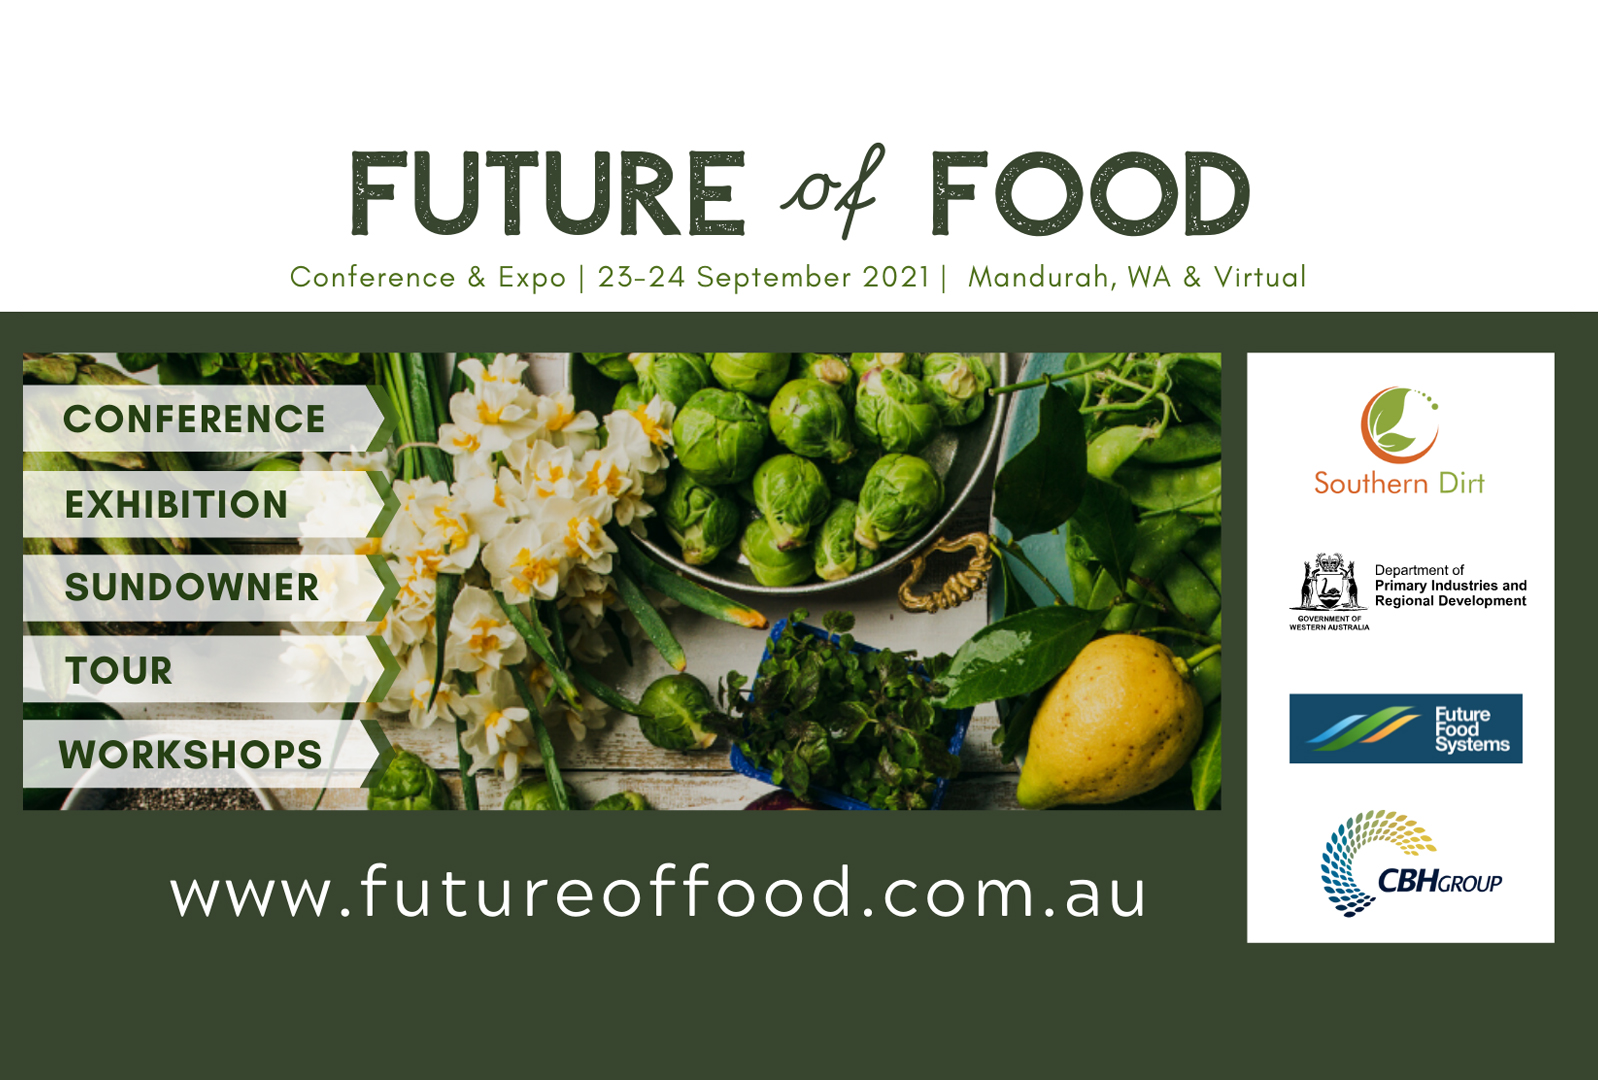 Future of Food 2021 Future Food Systems